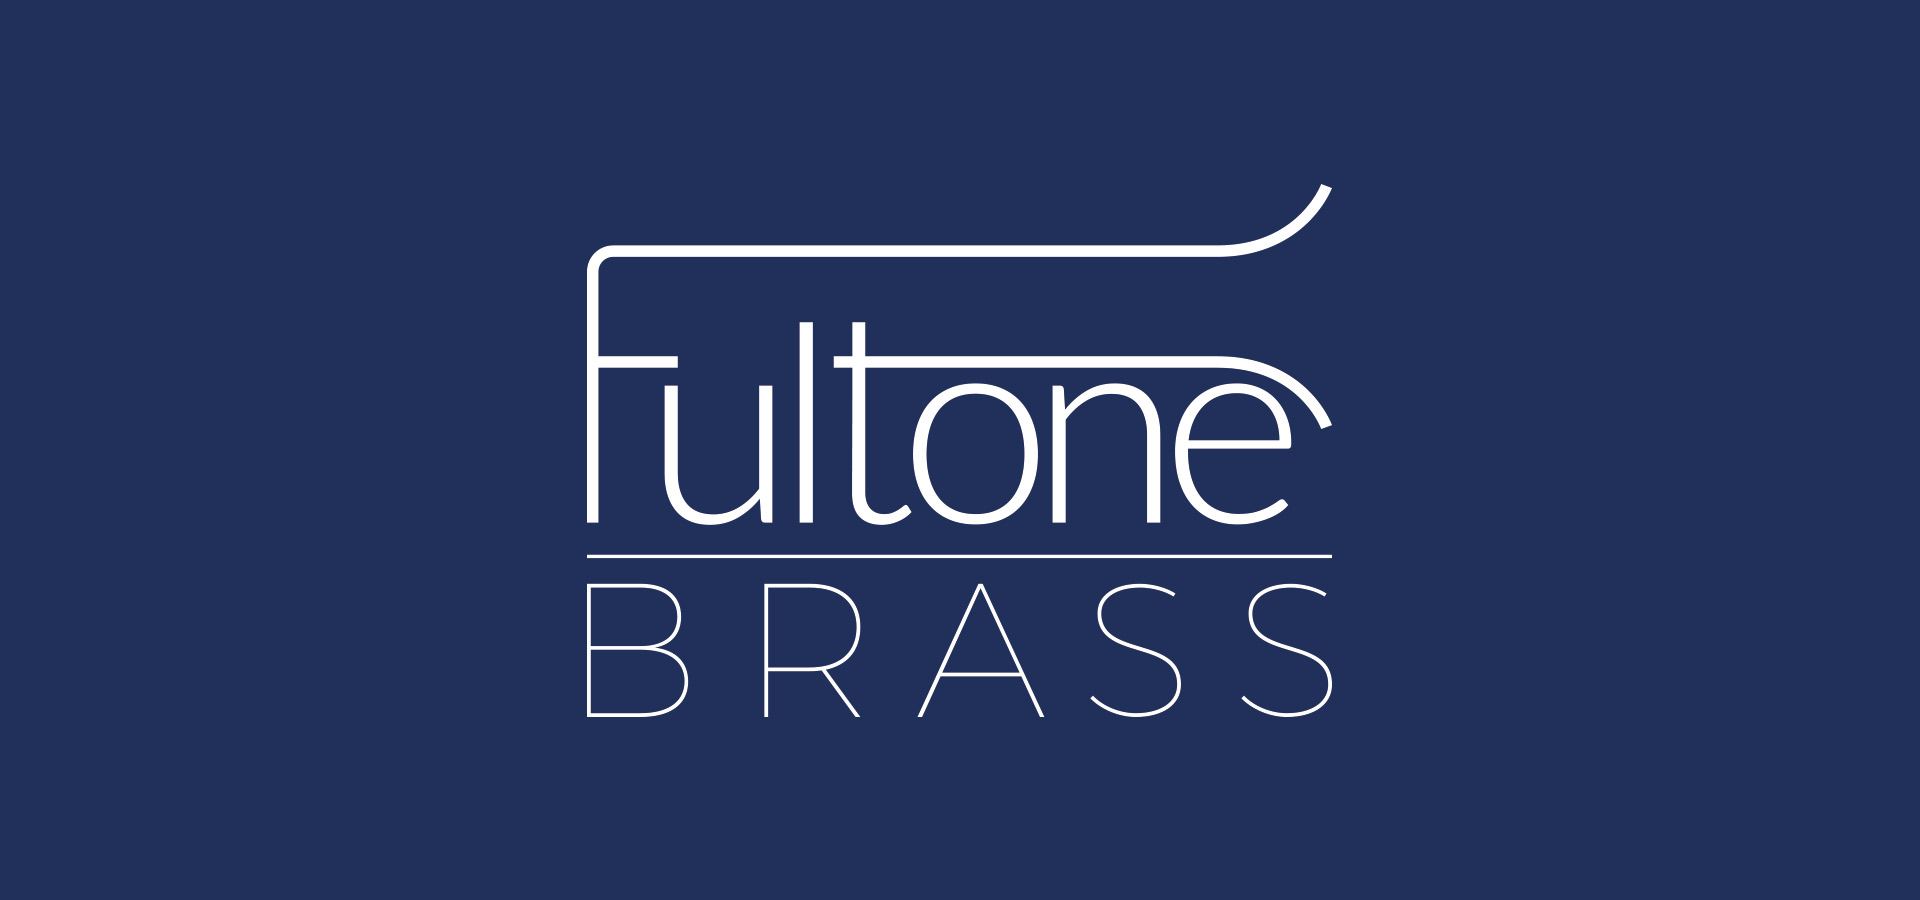 Fulton Brass - Contact Fultone Brass